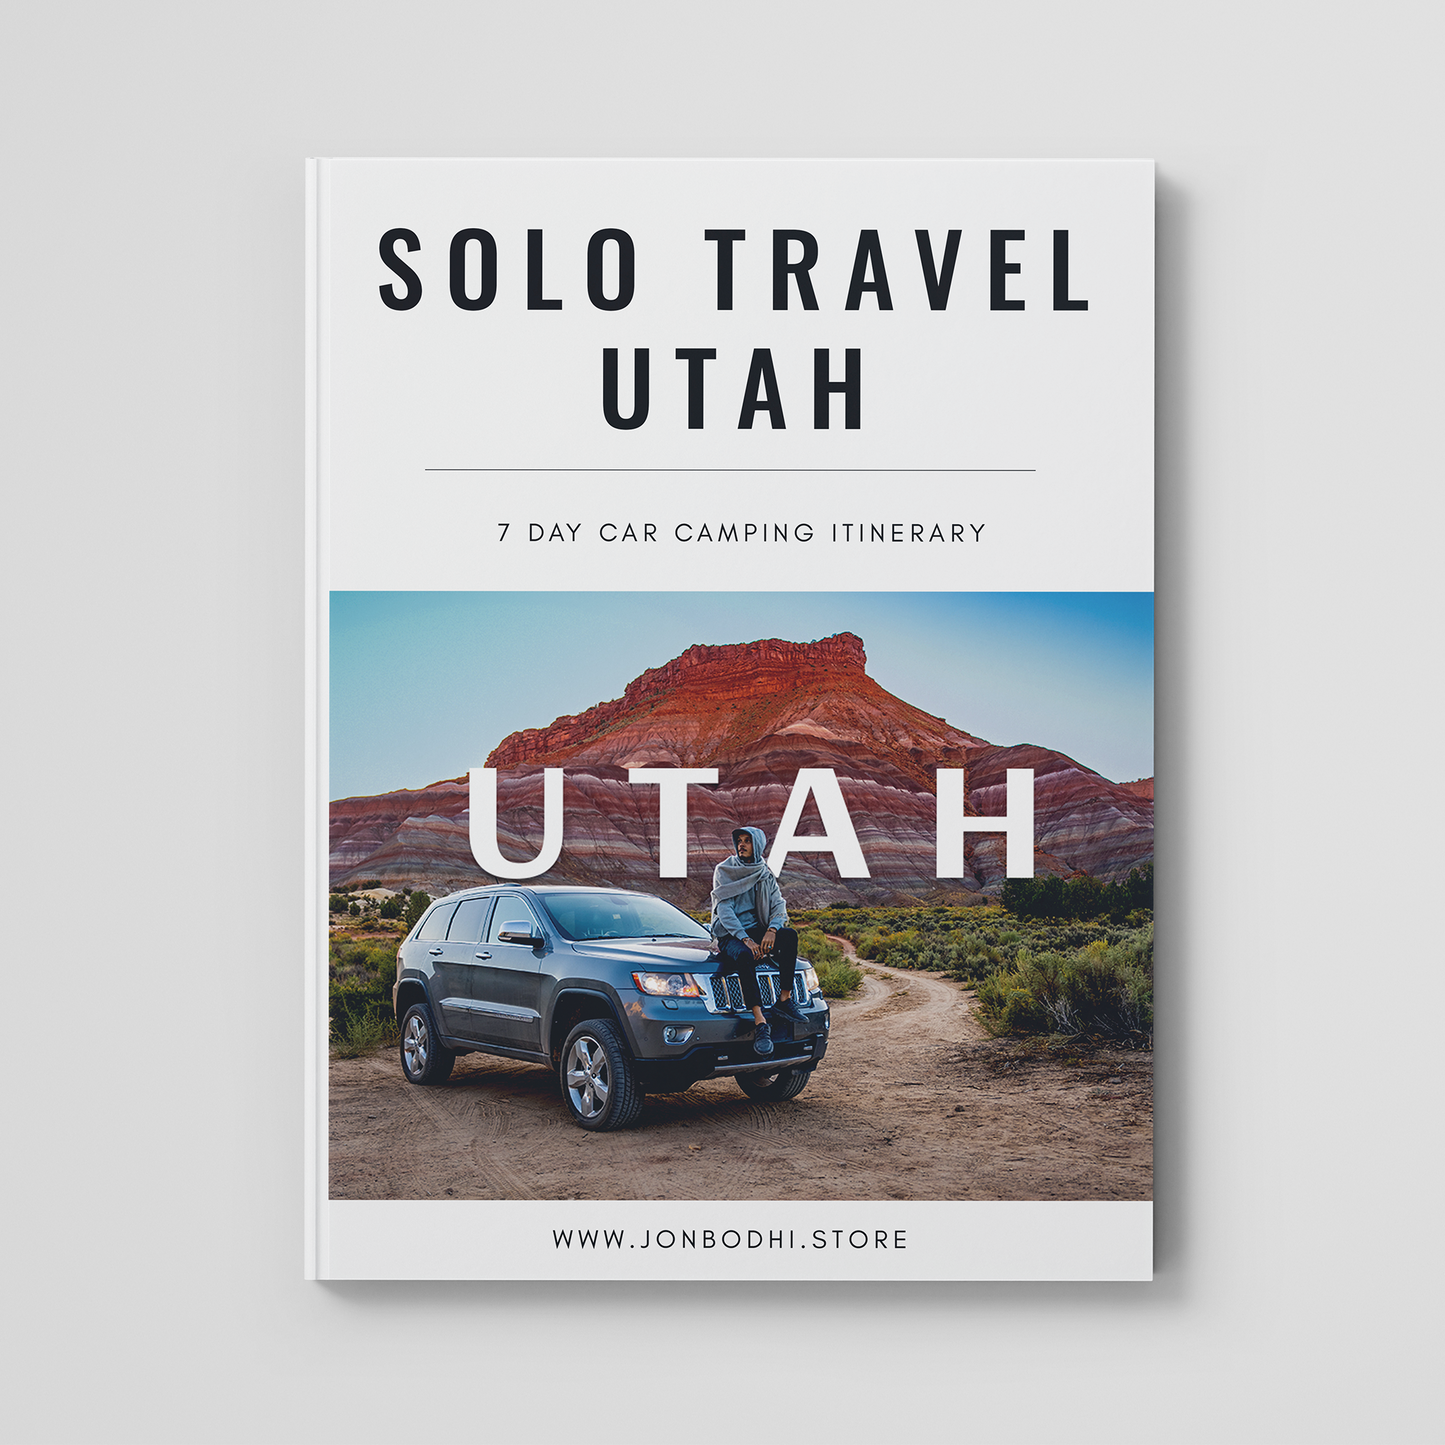 Utah Solo Travel - 7 Day Car Camping Itinerary